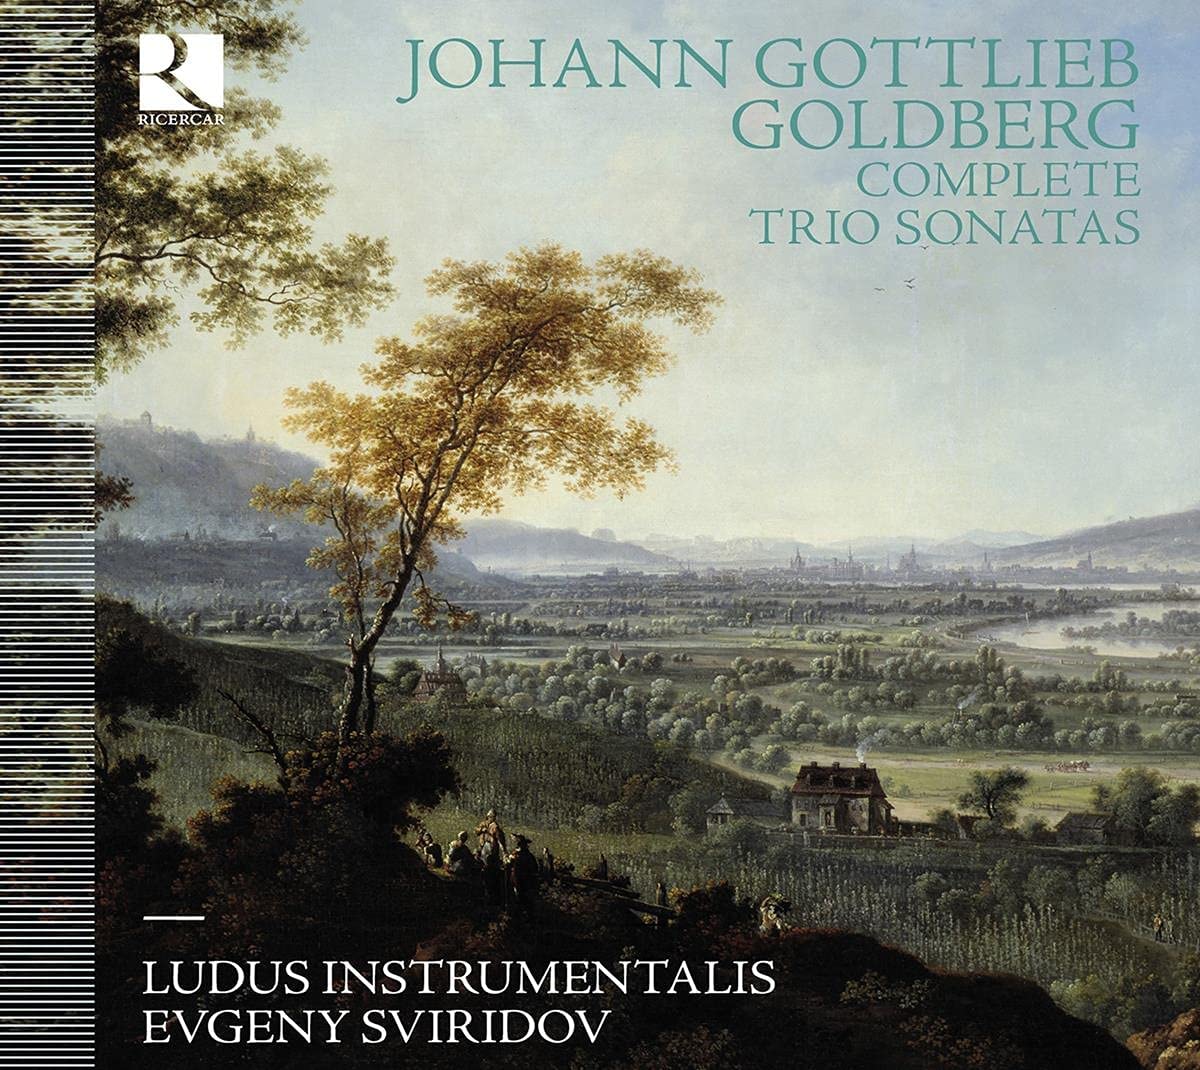 CD cover Goldberg Trio sonatas Ricercar Ludus Instrumentalis